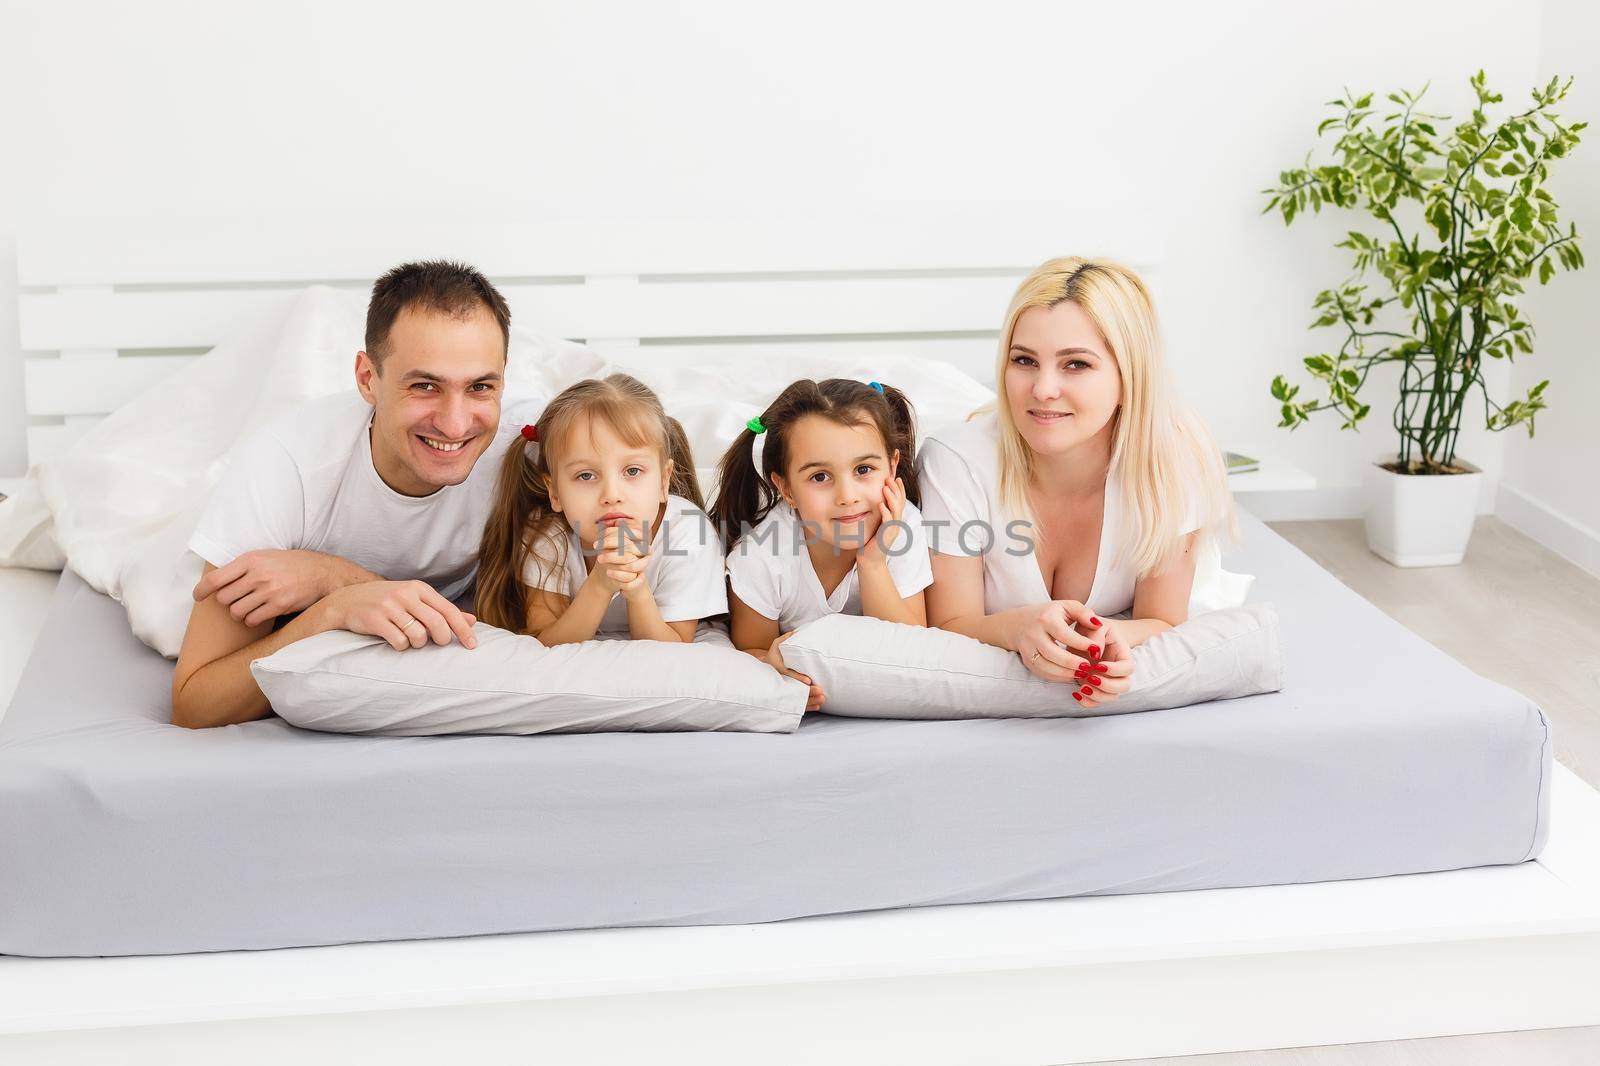 family morning in bed by Andelov13